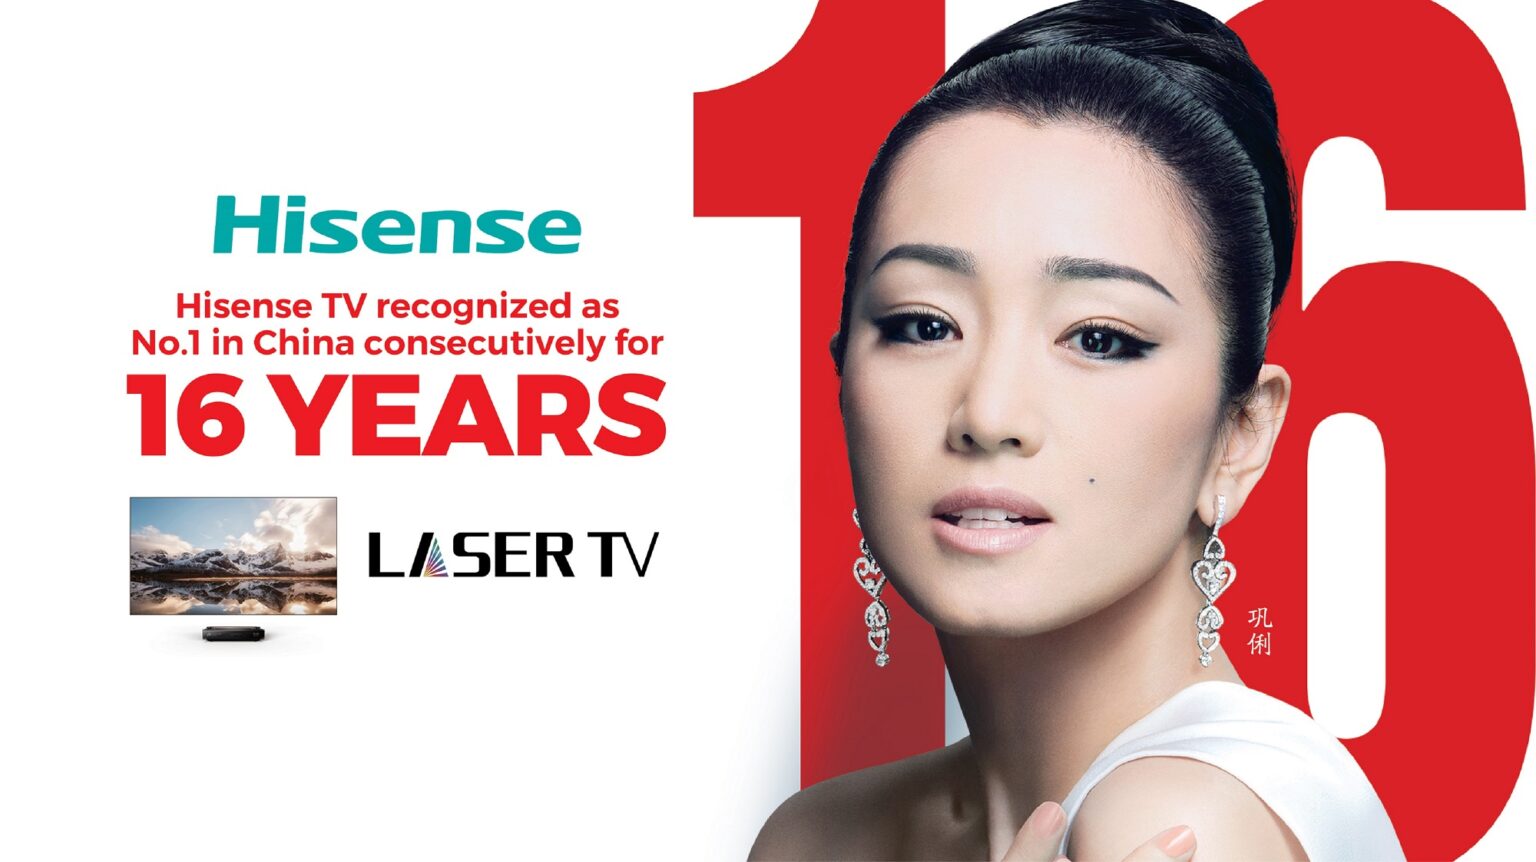 Hisense - Actress Gong Li As Global Brand Ambassador